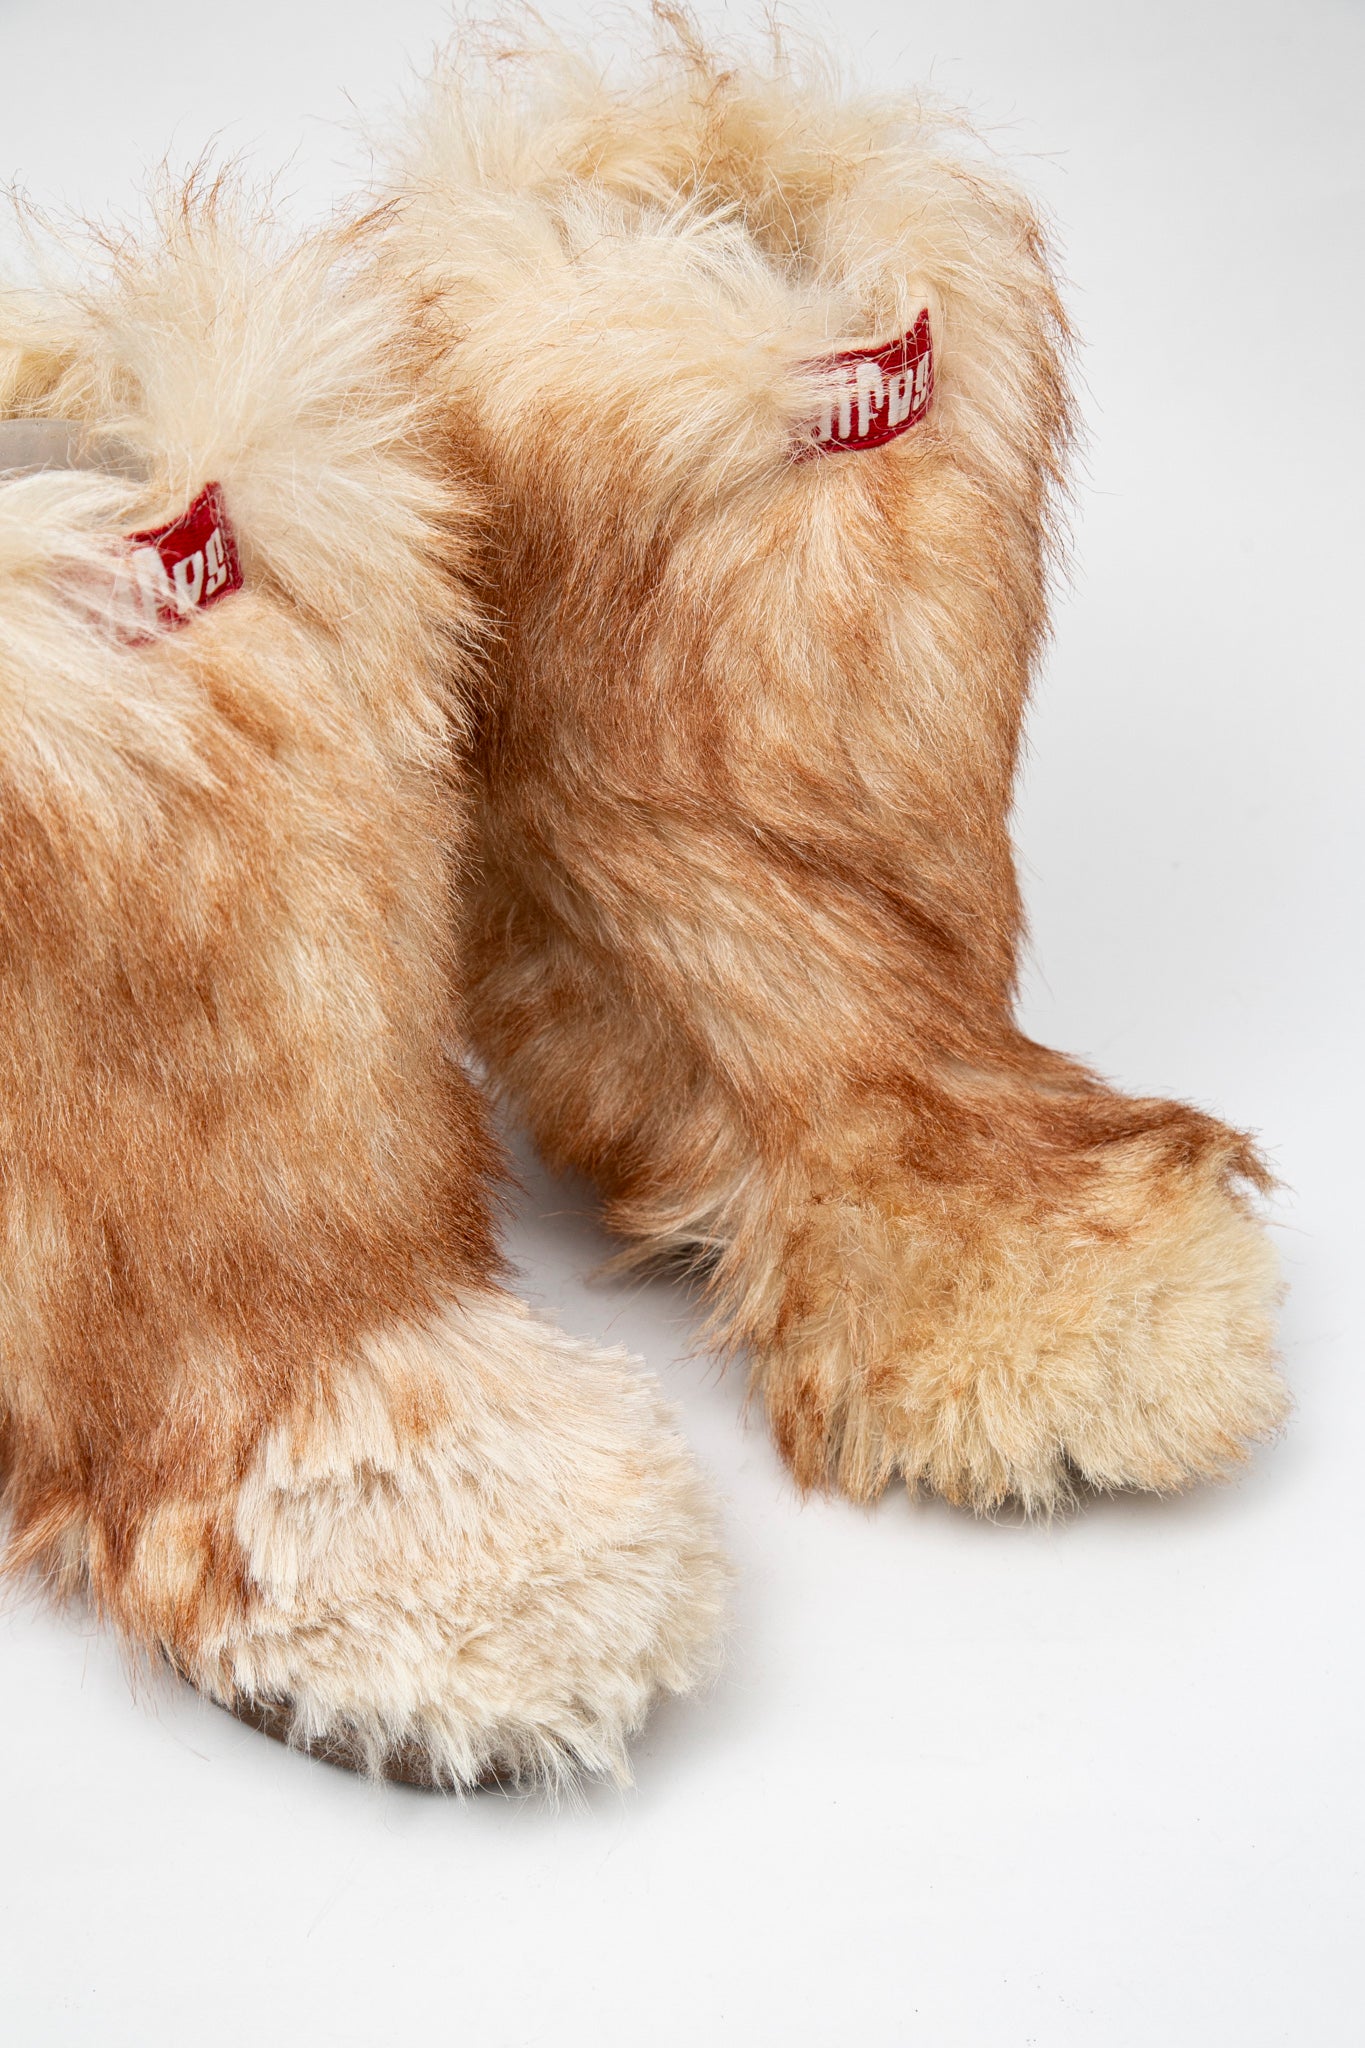 Aifos Yeti Fur Boots